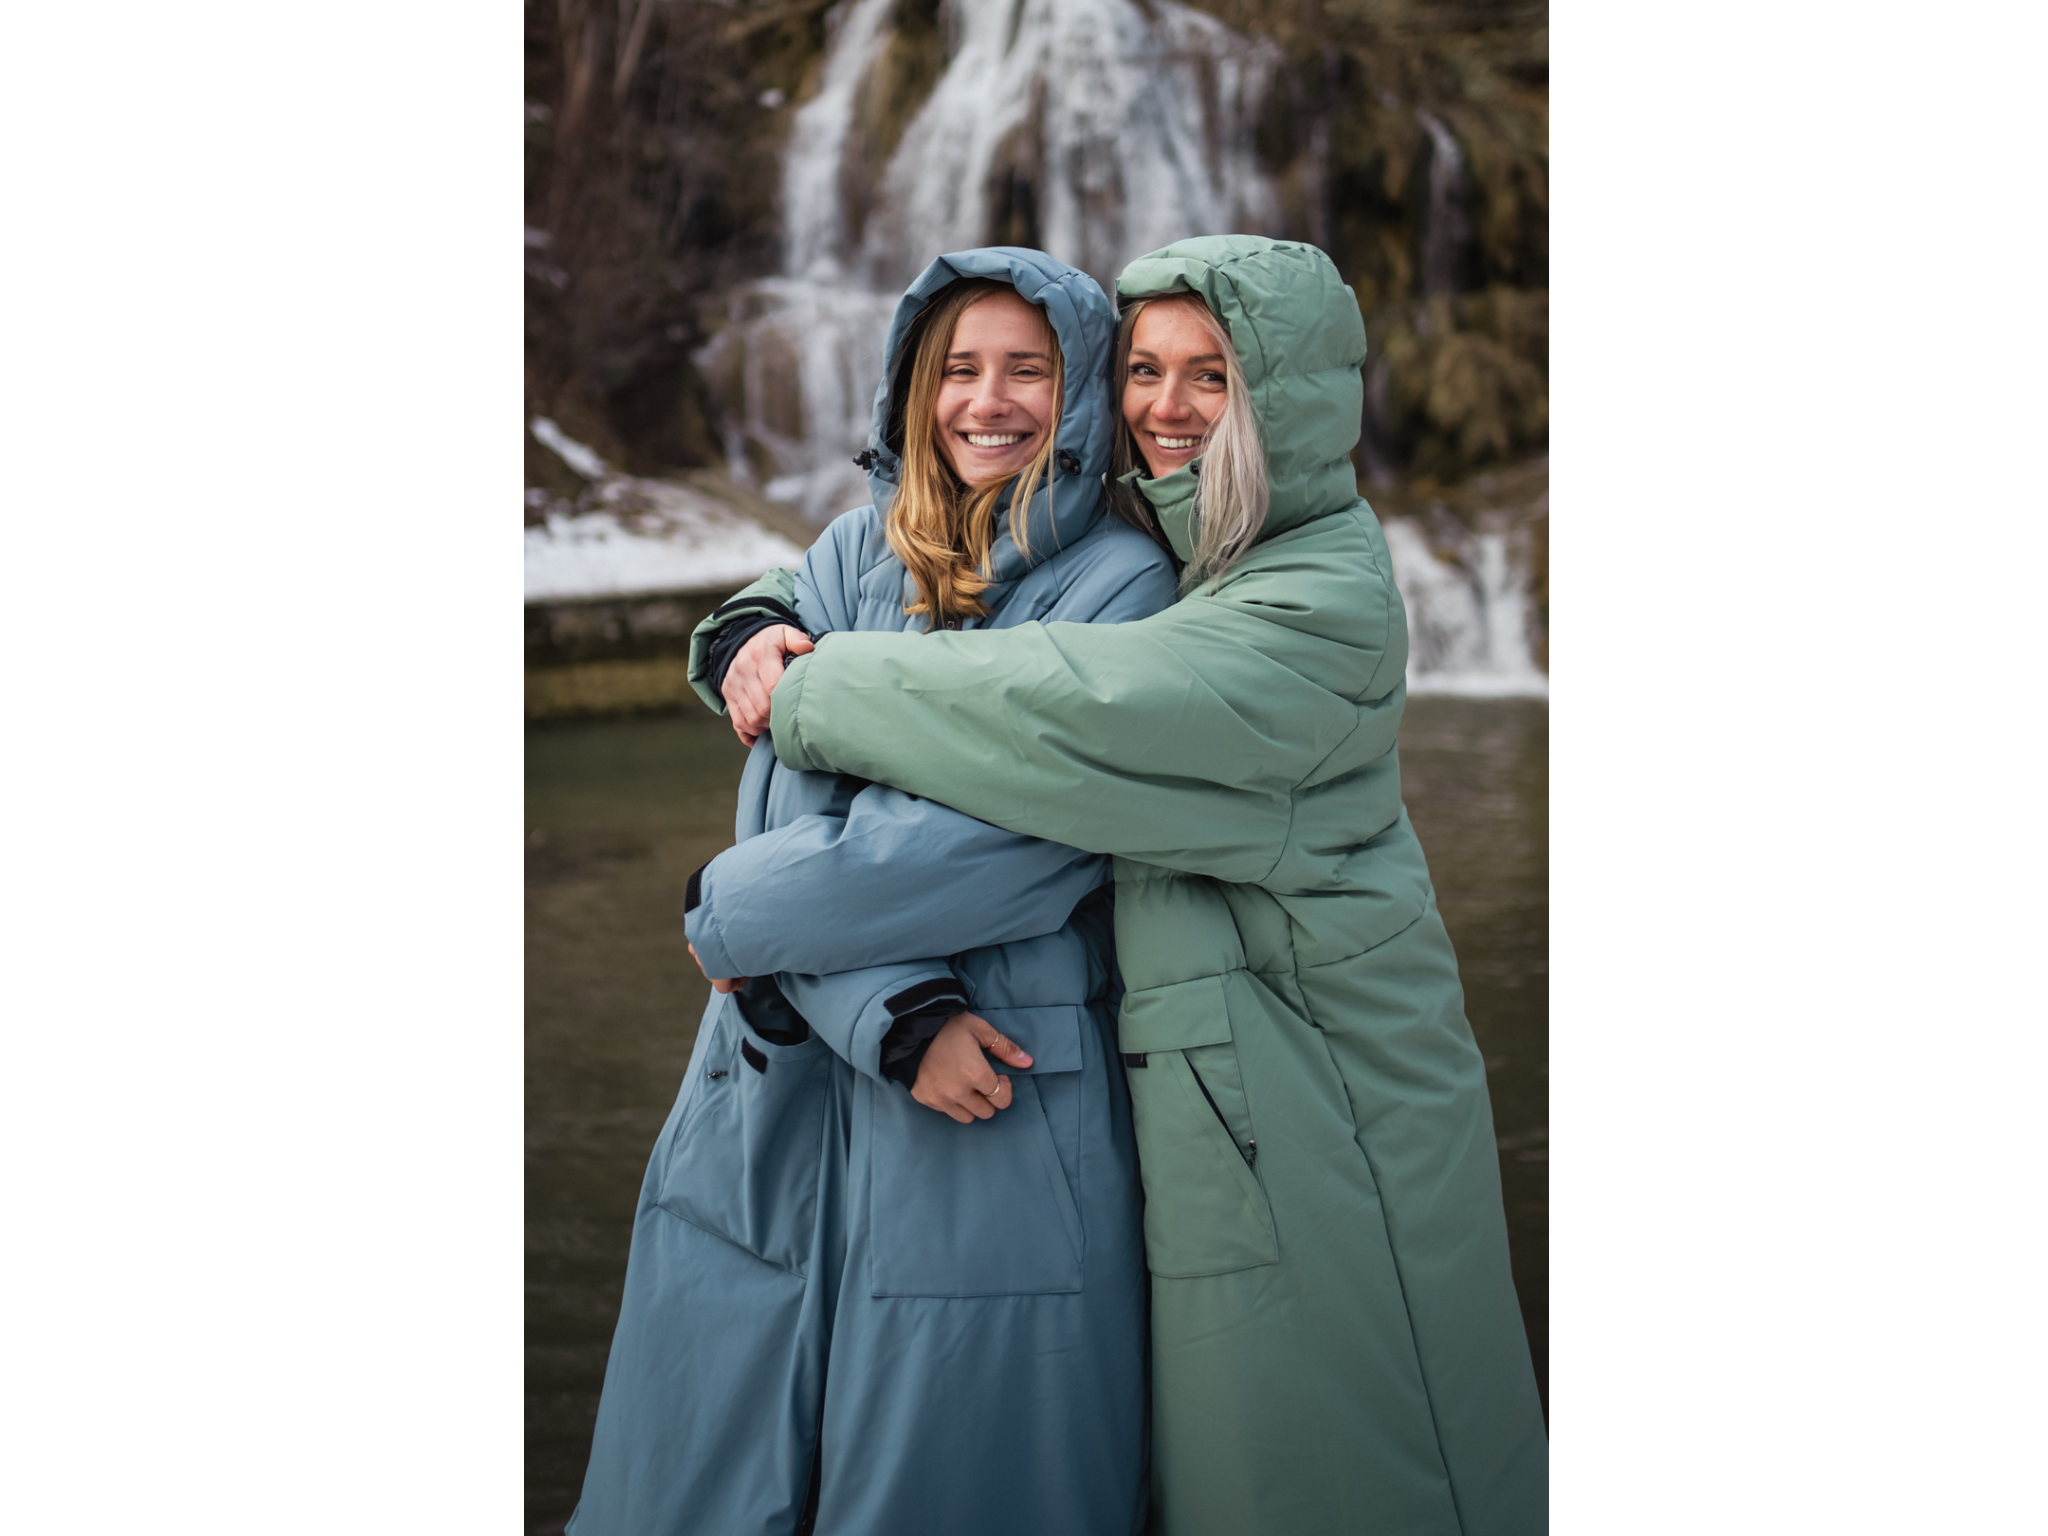 Waterproof Changing Robes - Vivida Lifestyle